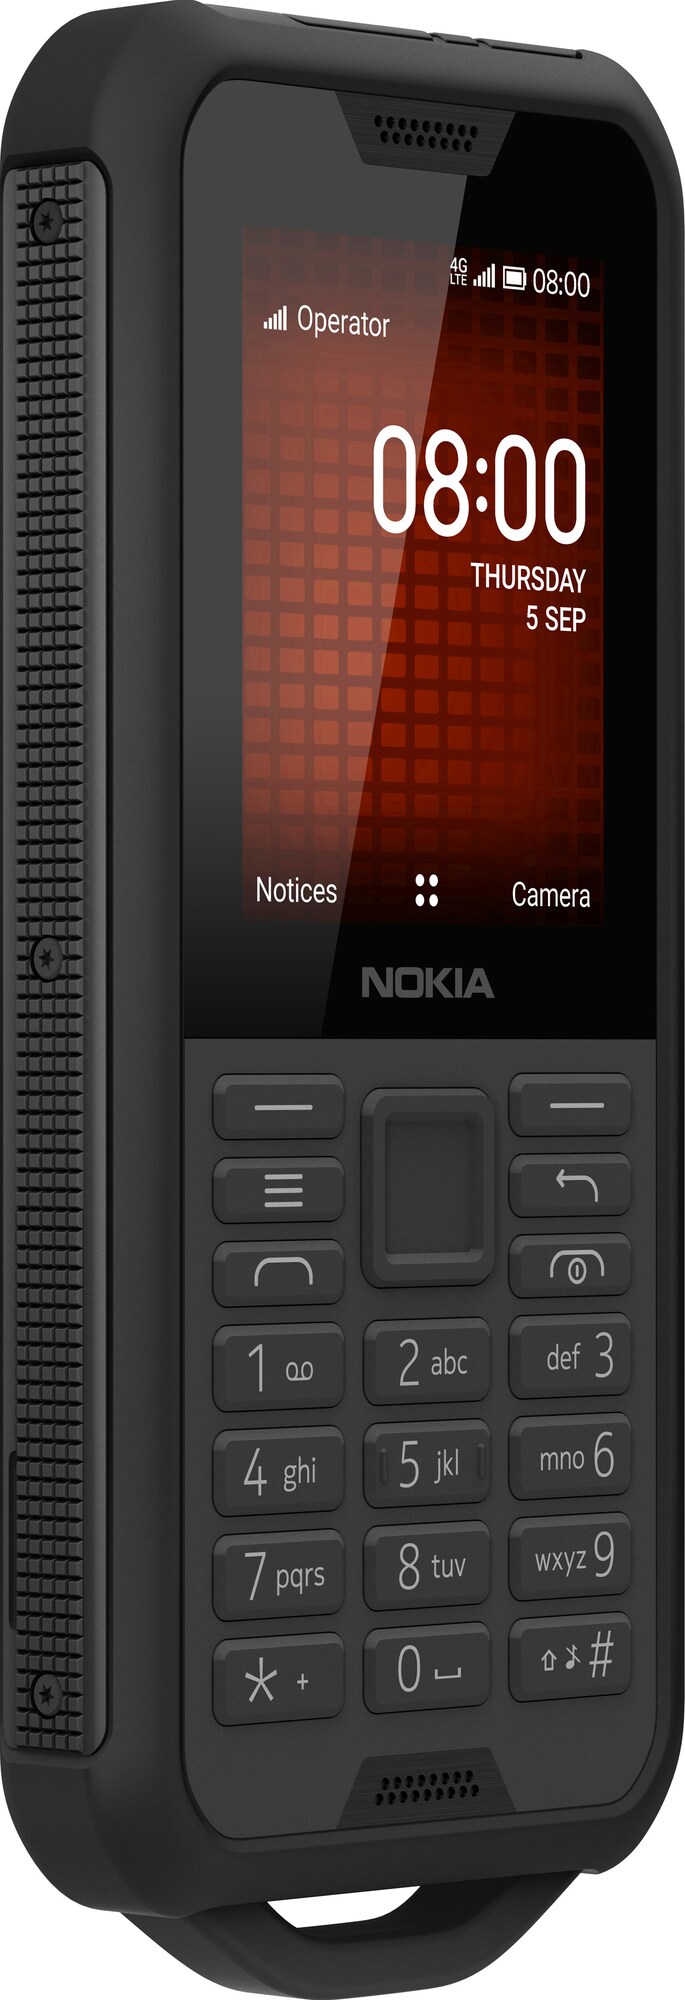 Nokia 800 Tough mobiltelefon (sort) - Mobiltelefoner - Elgiganten